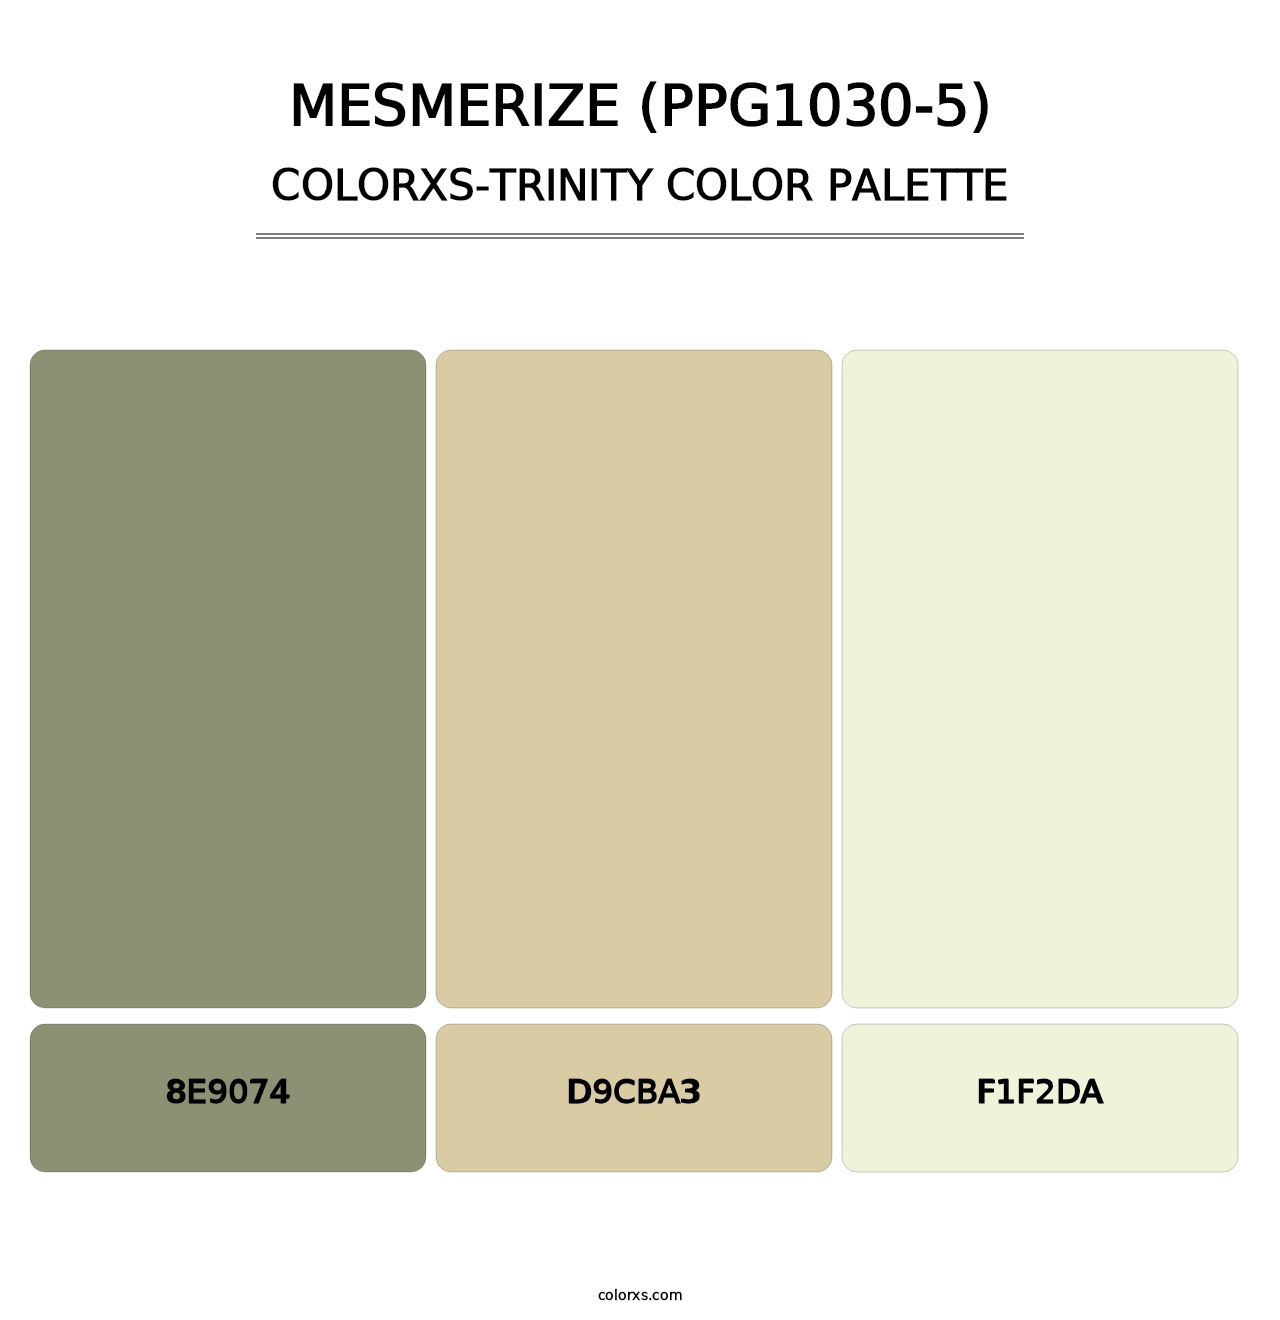 Mesmerize (PPG1030-5) - Colorxs Trinity Palette